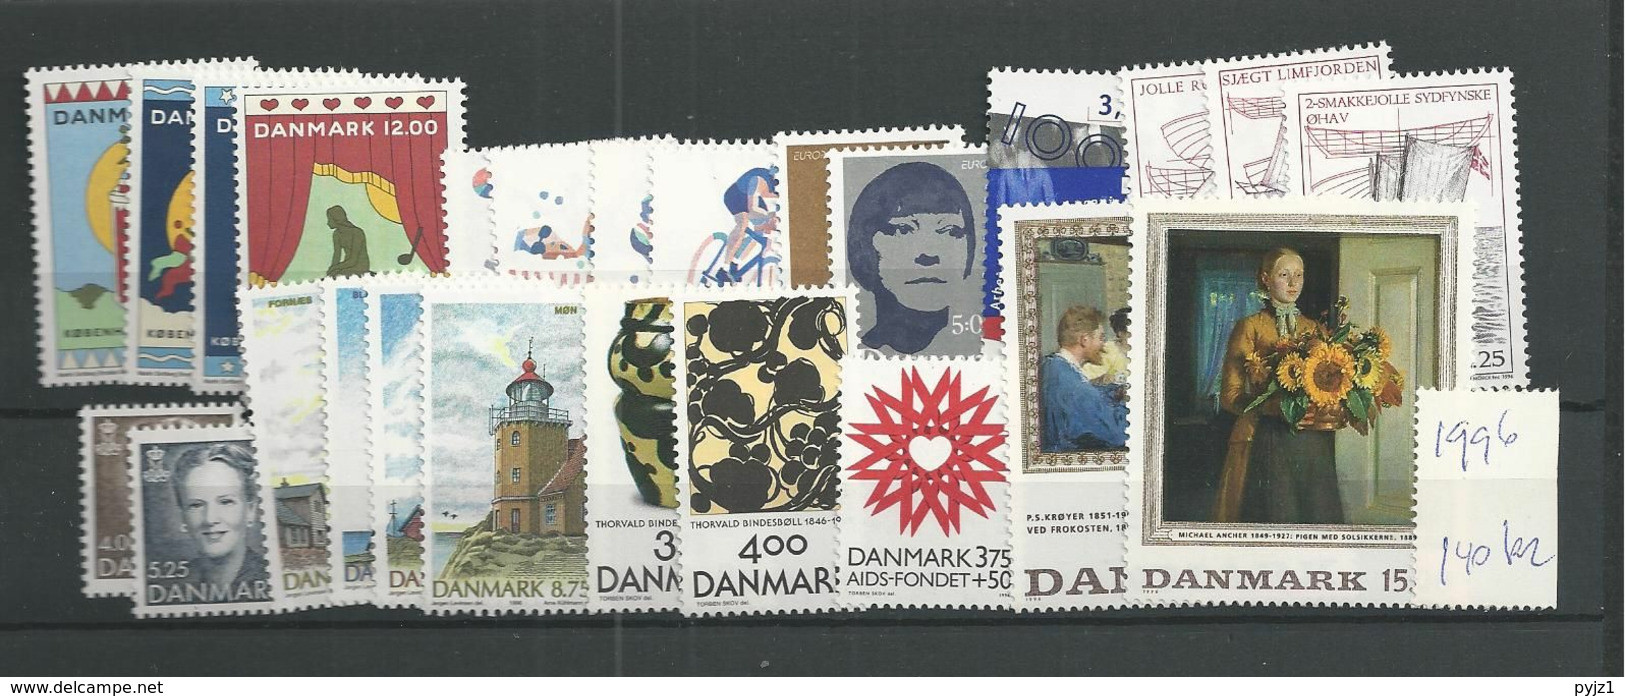 1996 MNH Denmark, Dänemark, Year Complete, Postfris - Années Complètes